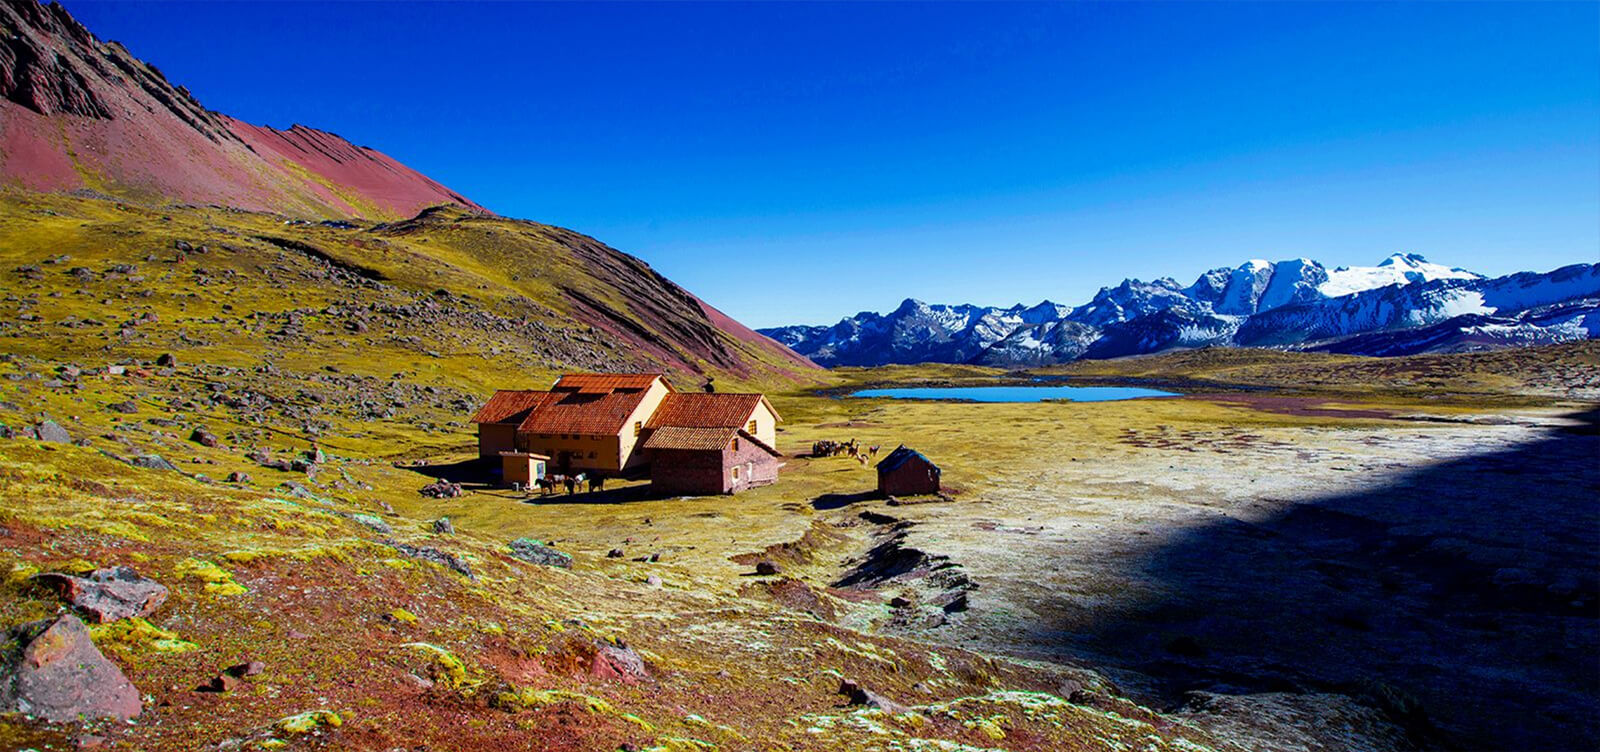 Albergues Andean Lodges